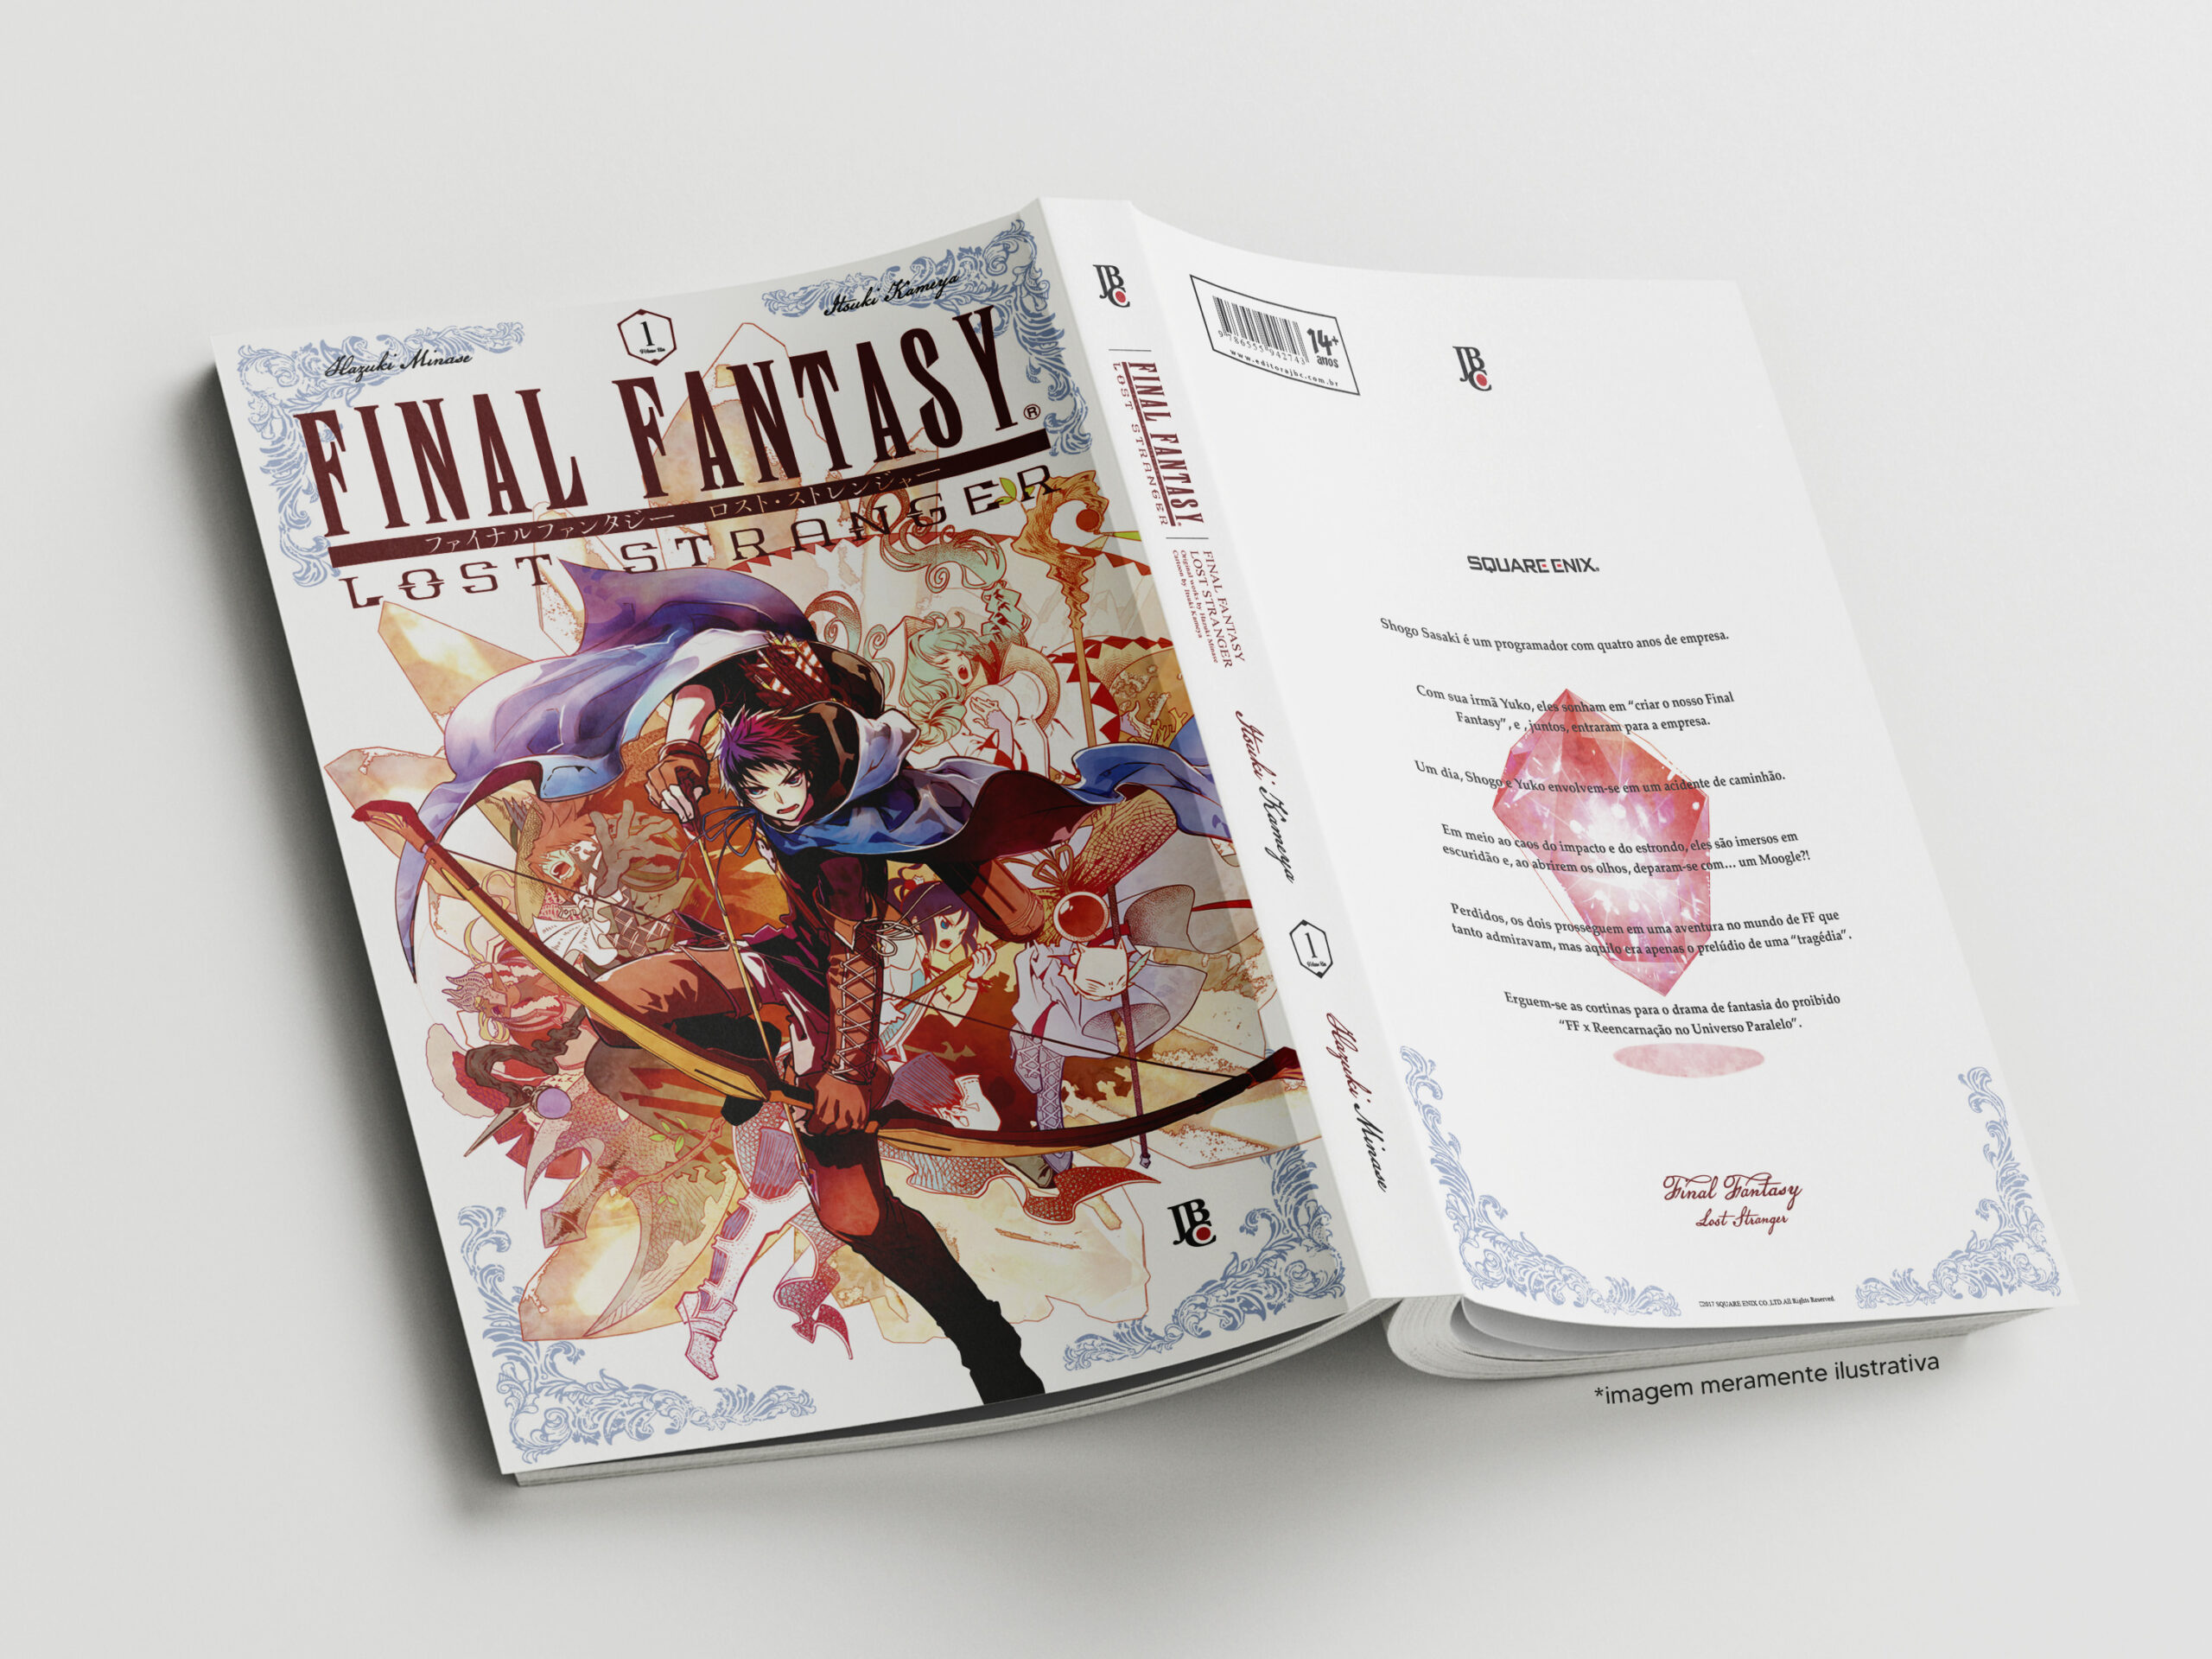 JBC na Mídia: Final Fantasy - Lost Stranger no Tecmundo - Editora JBC